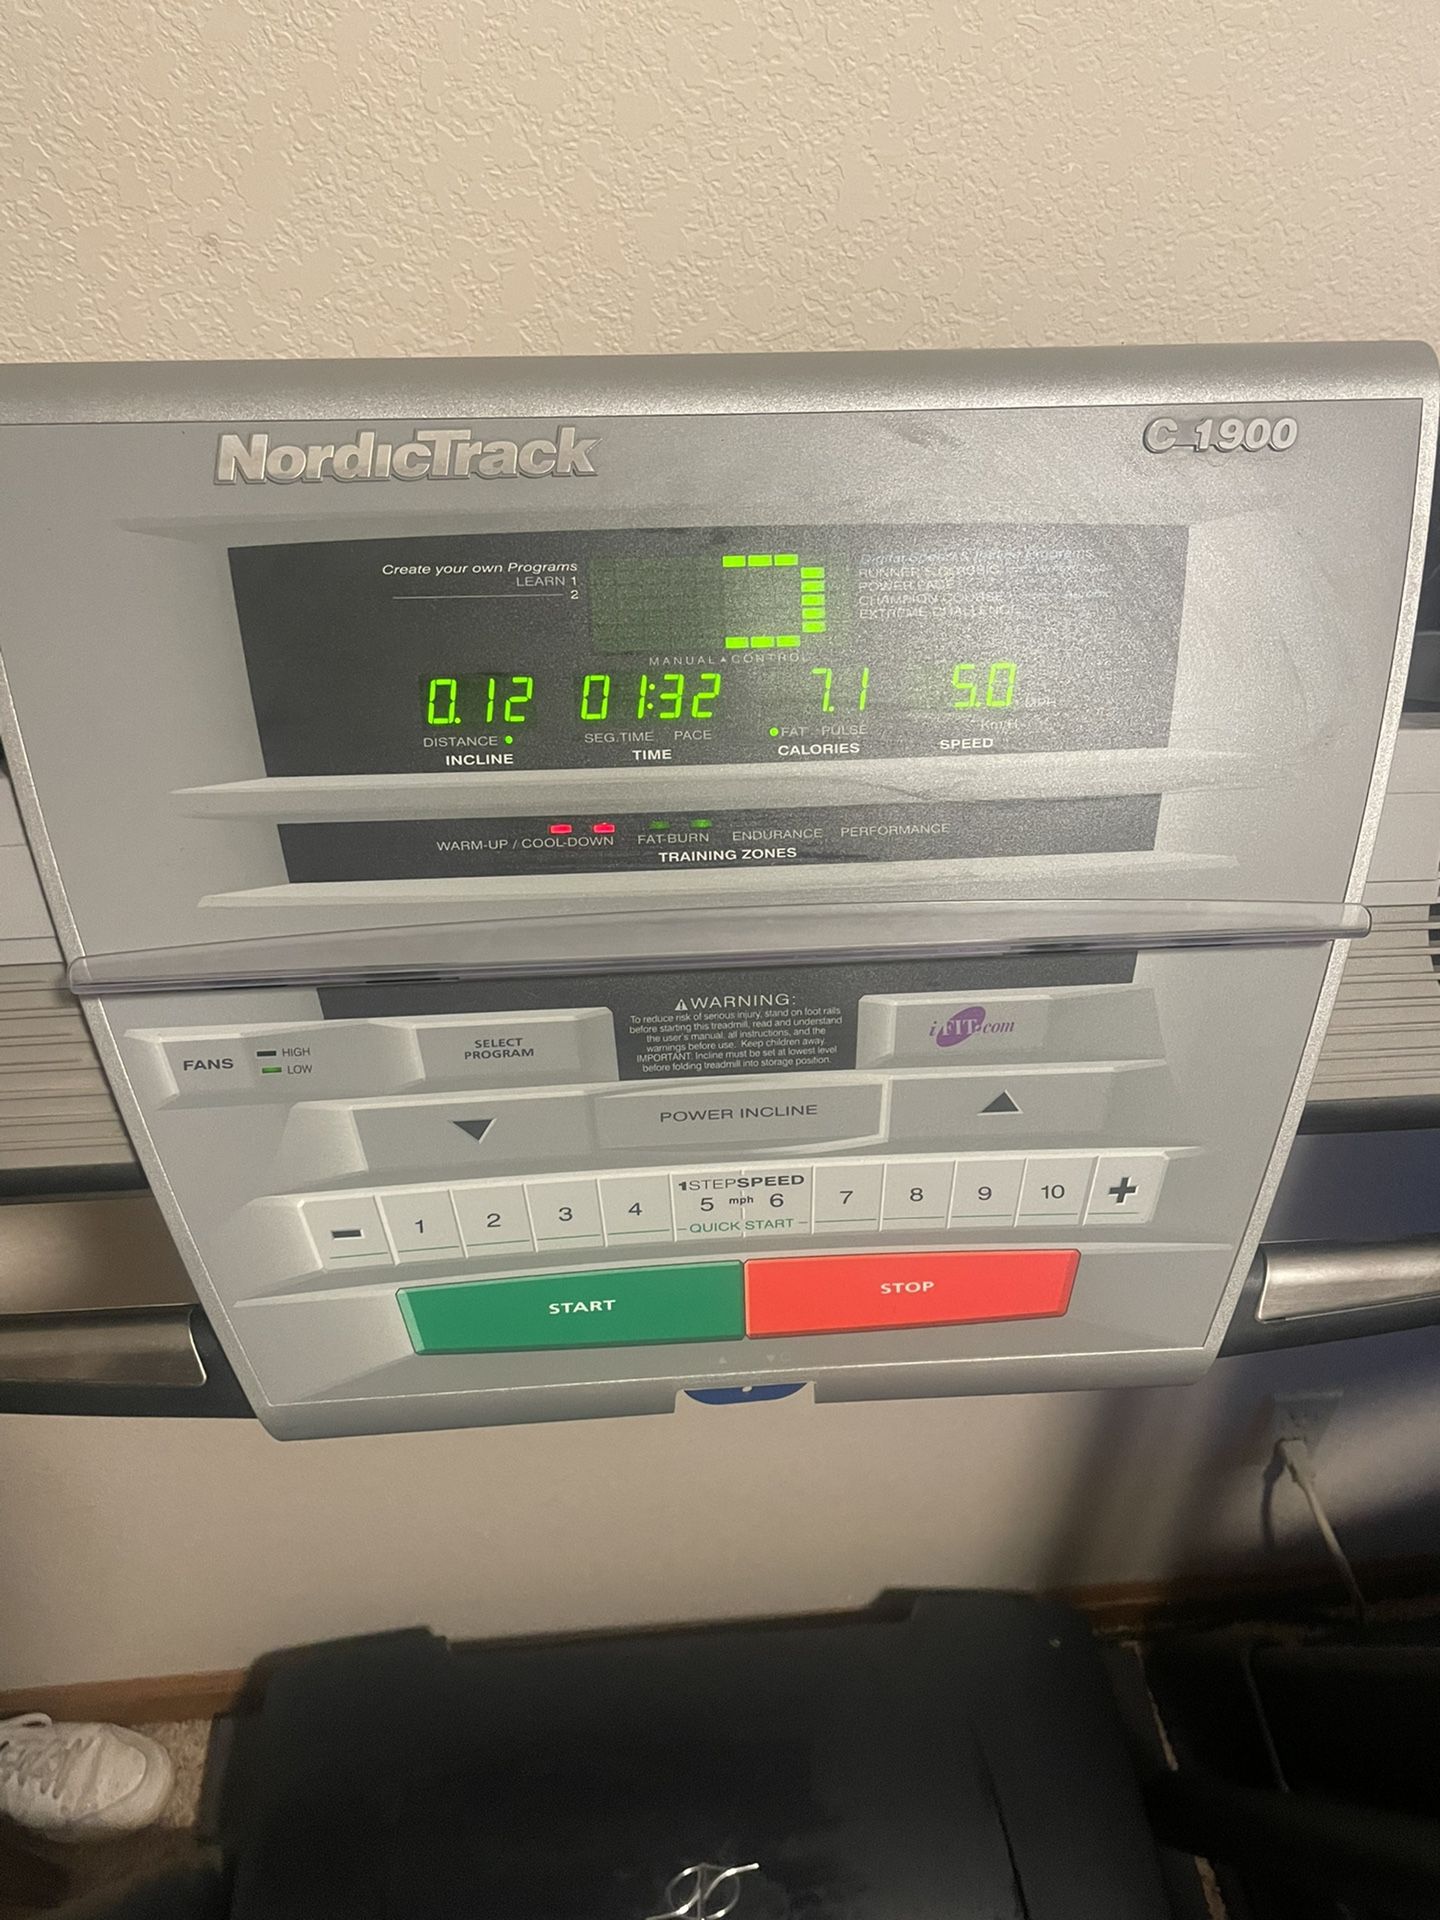 Nordictrack C1900 Treadmill